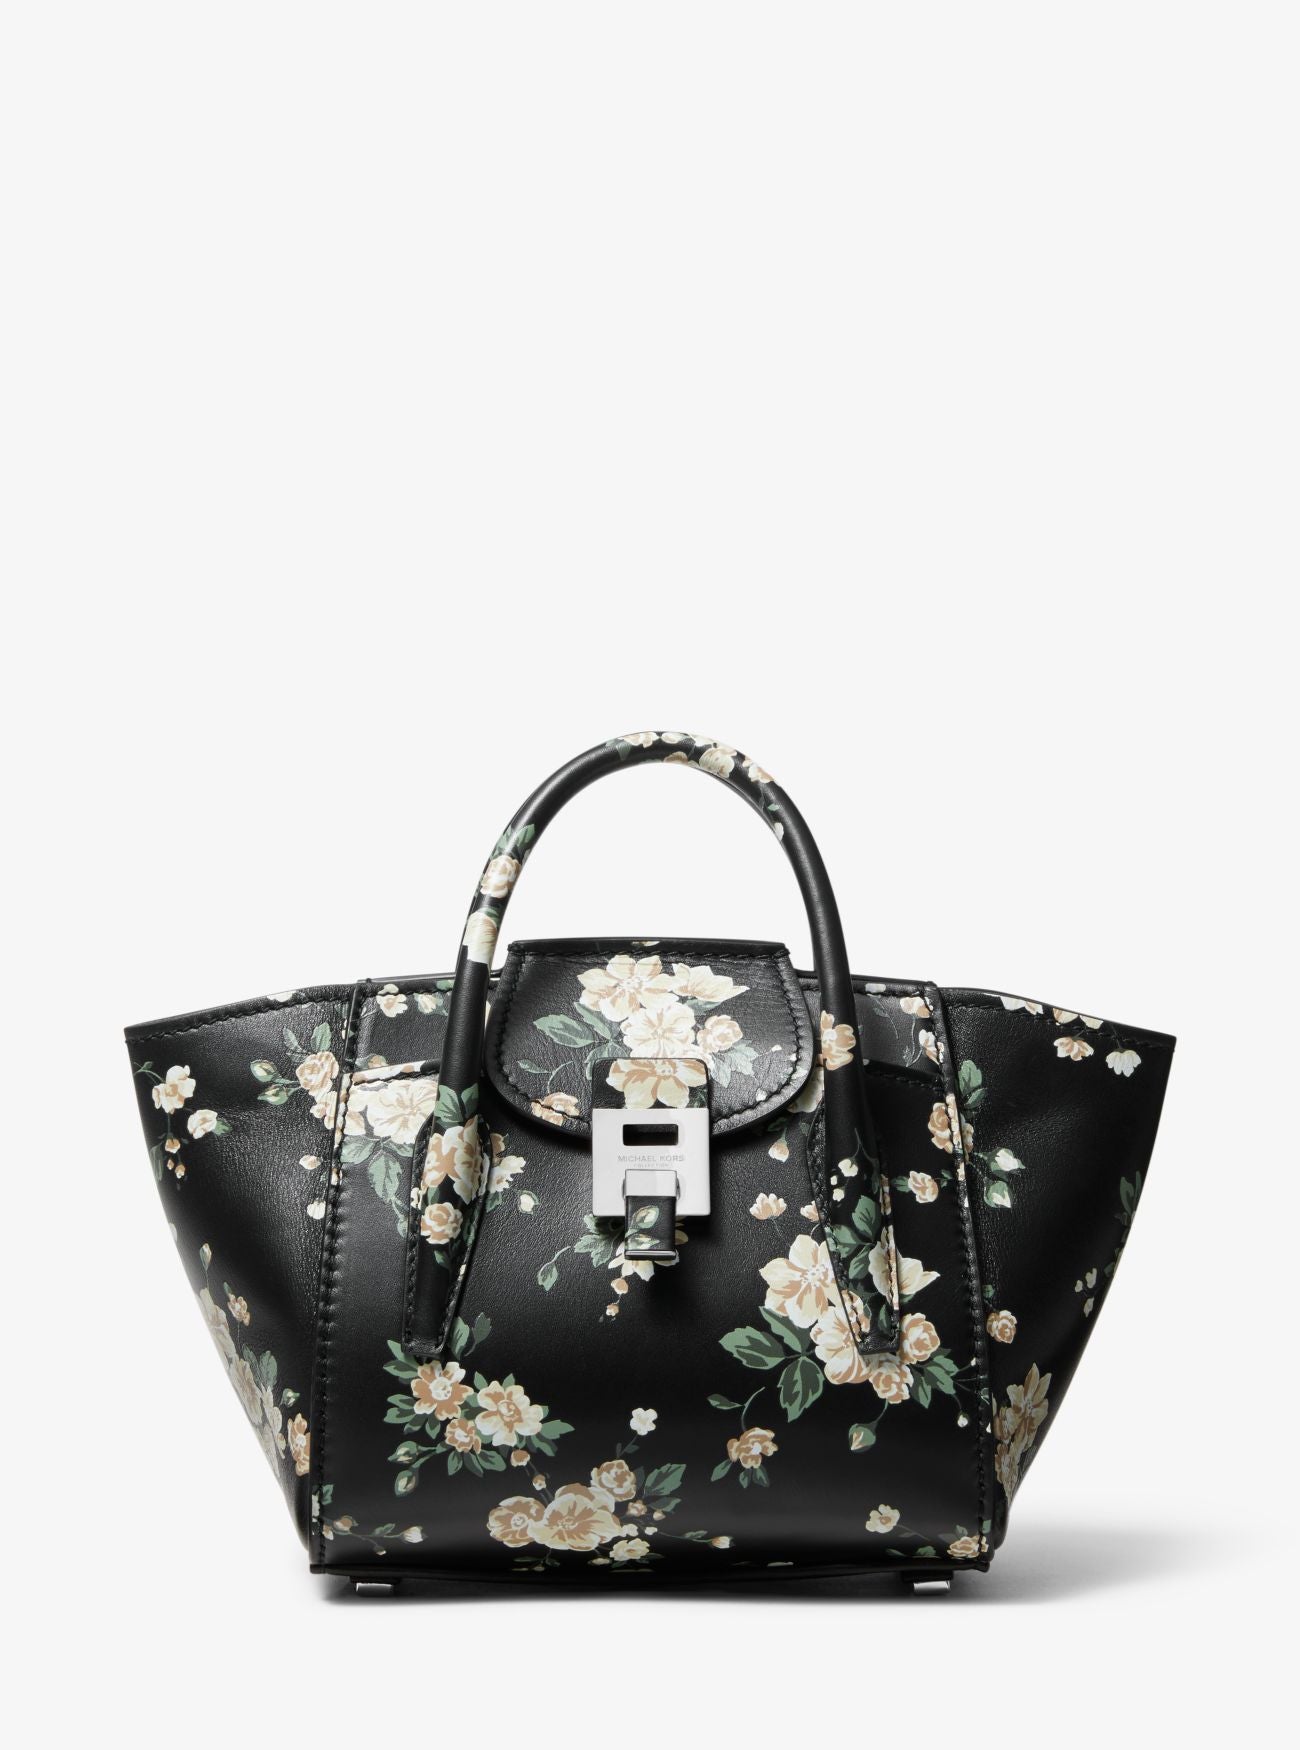 Meet the Bancroft: Michael Kors' new bag collection